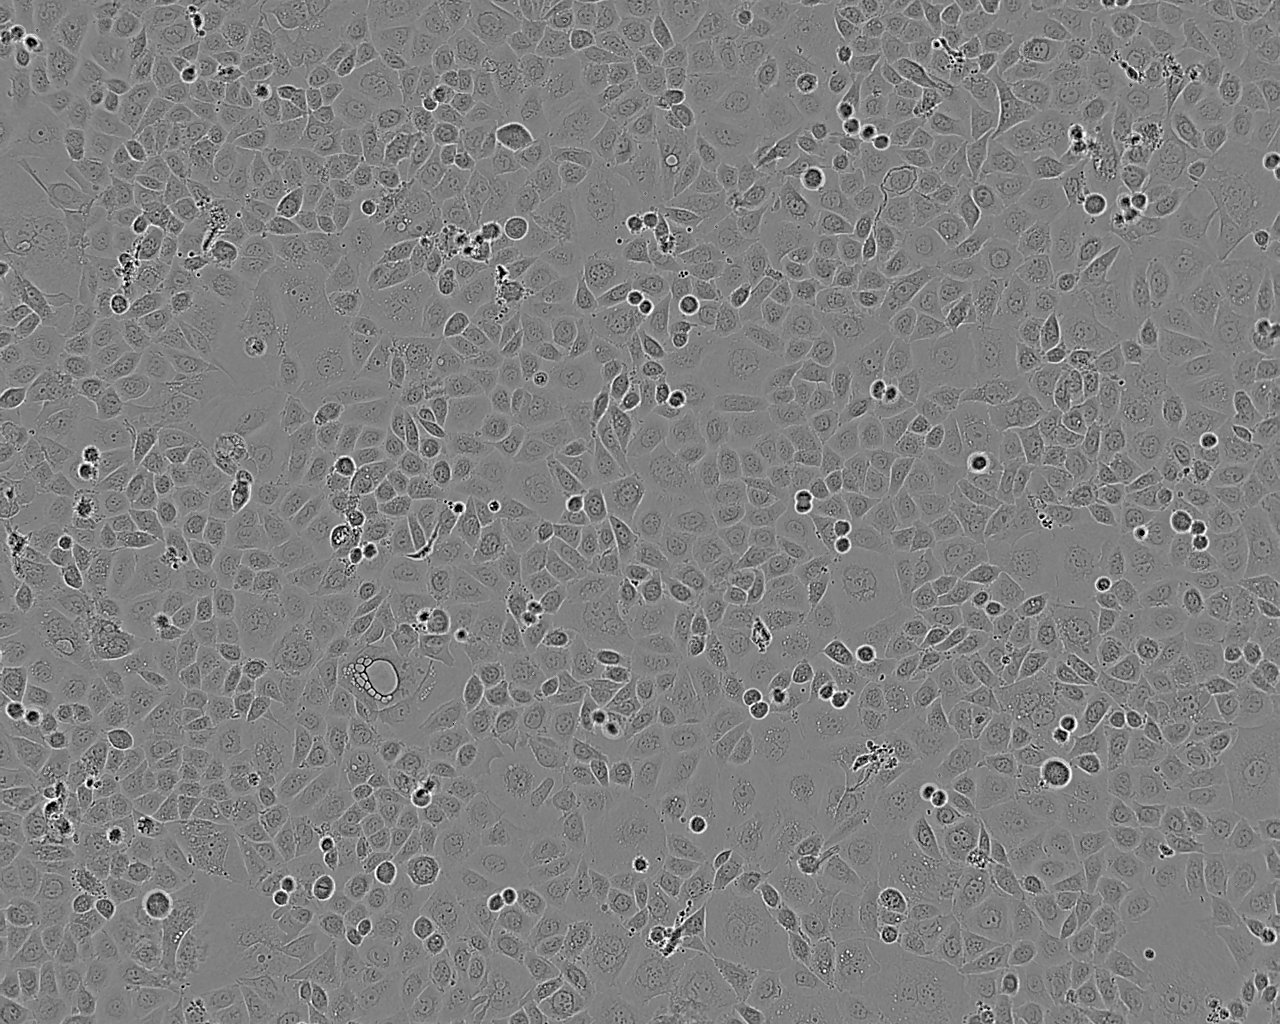 THLE-3 Cells|人肝永生化细胞系,THLE-3 Cells